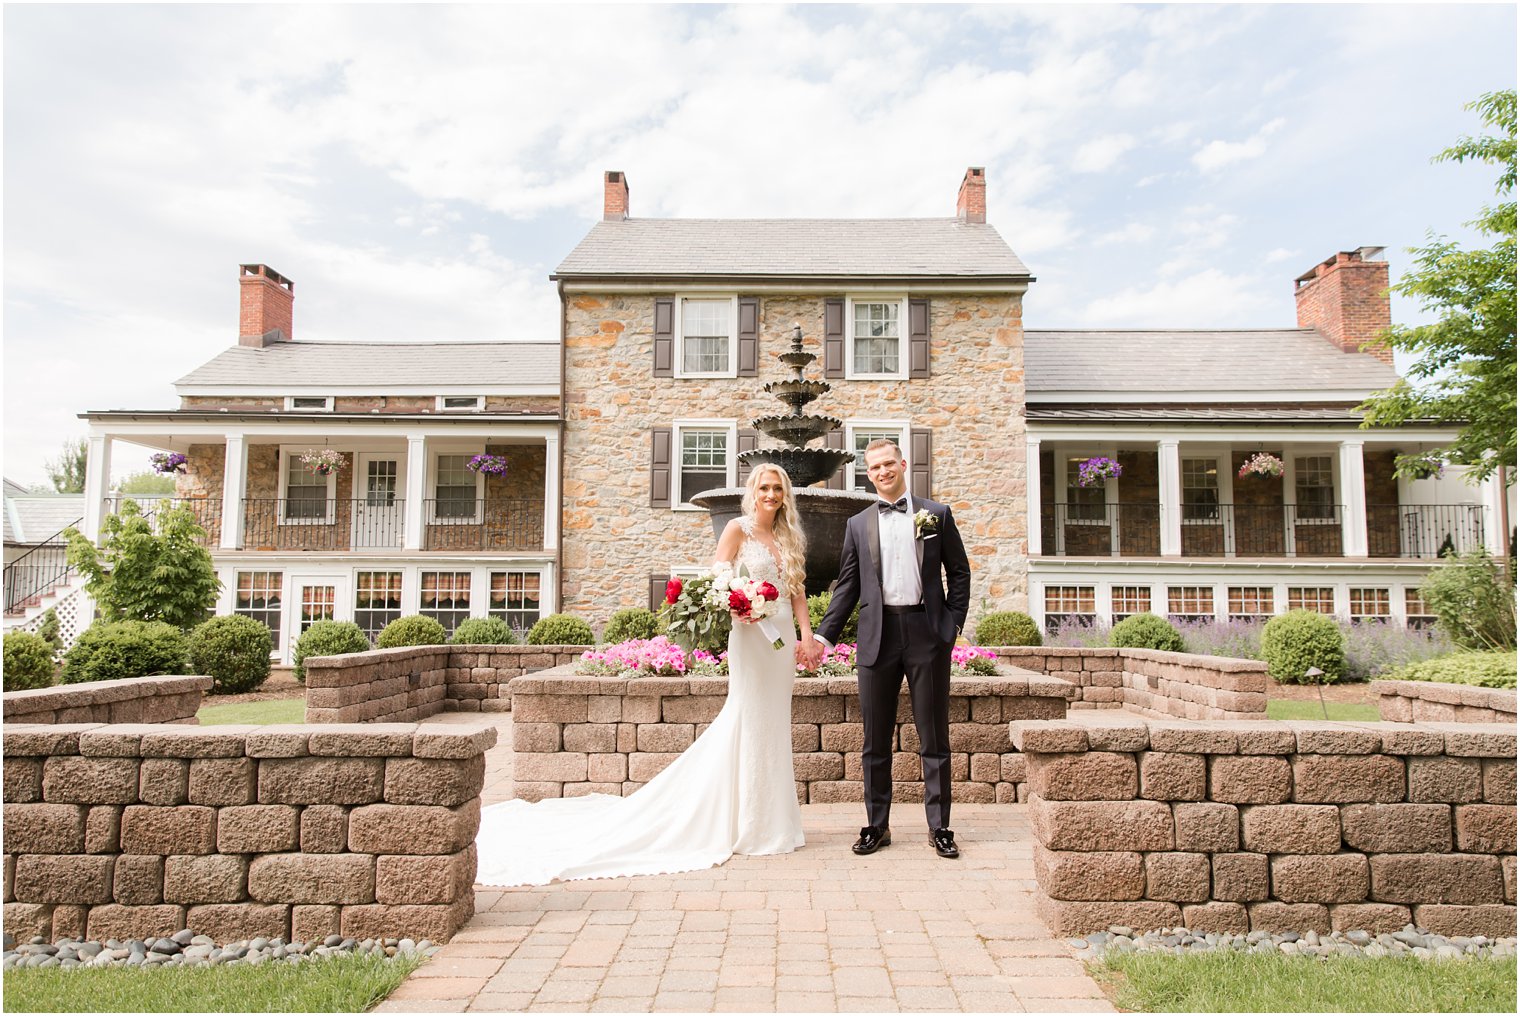 Wedding photos at the Farmhouse at the Grand Colonial in Hampton, NJ